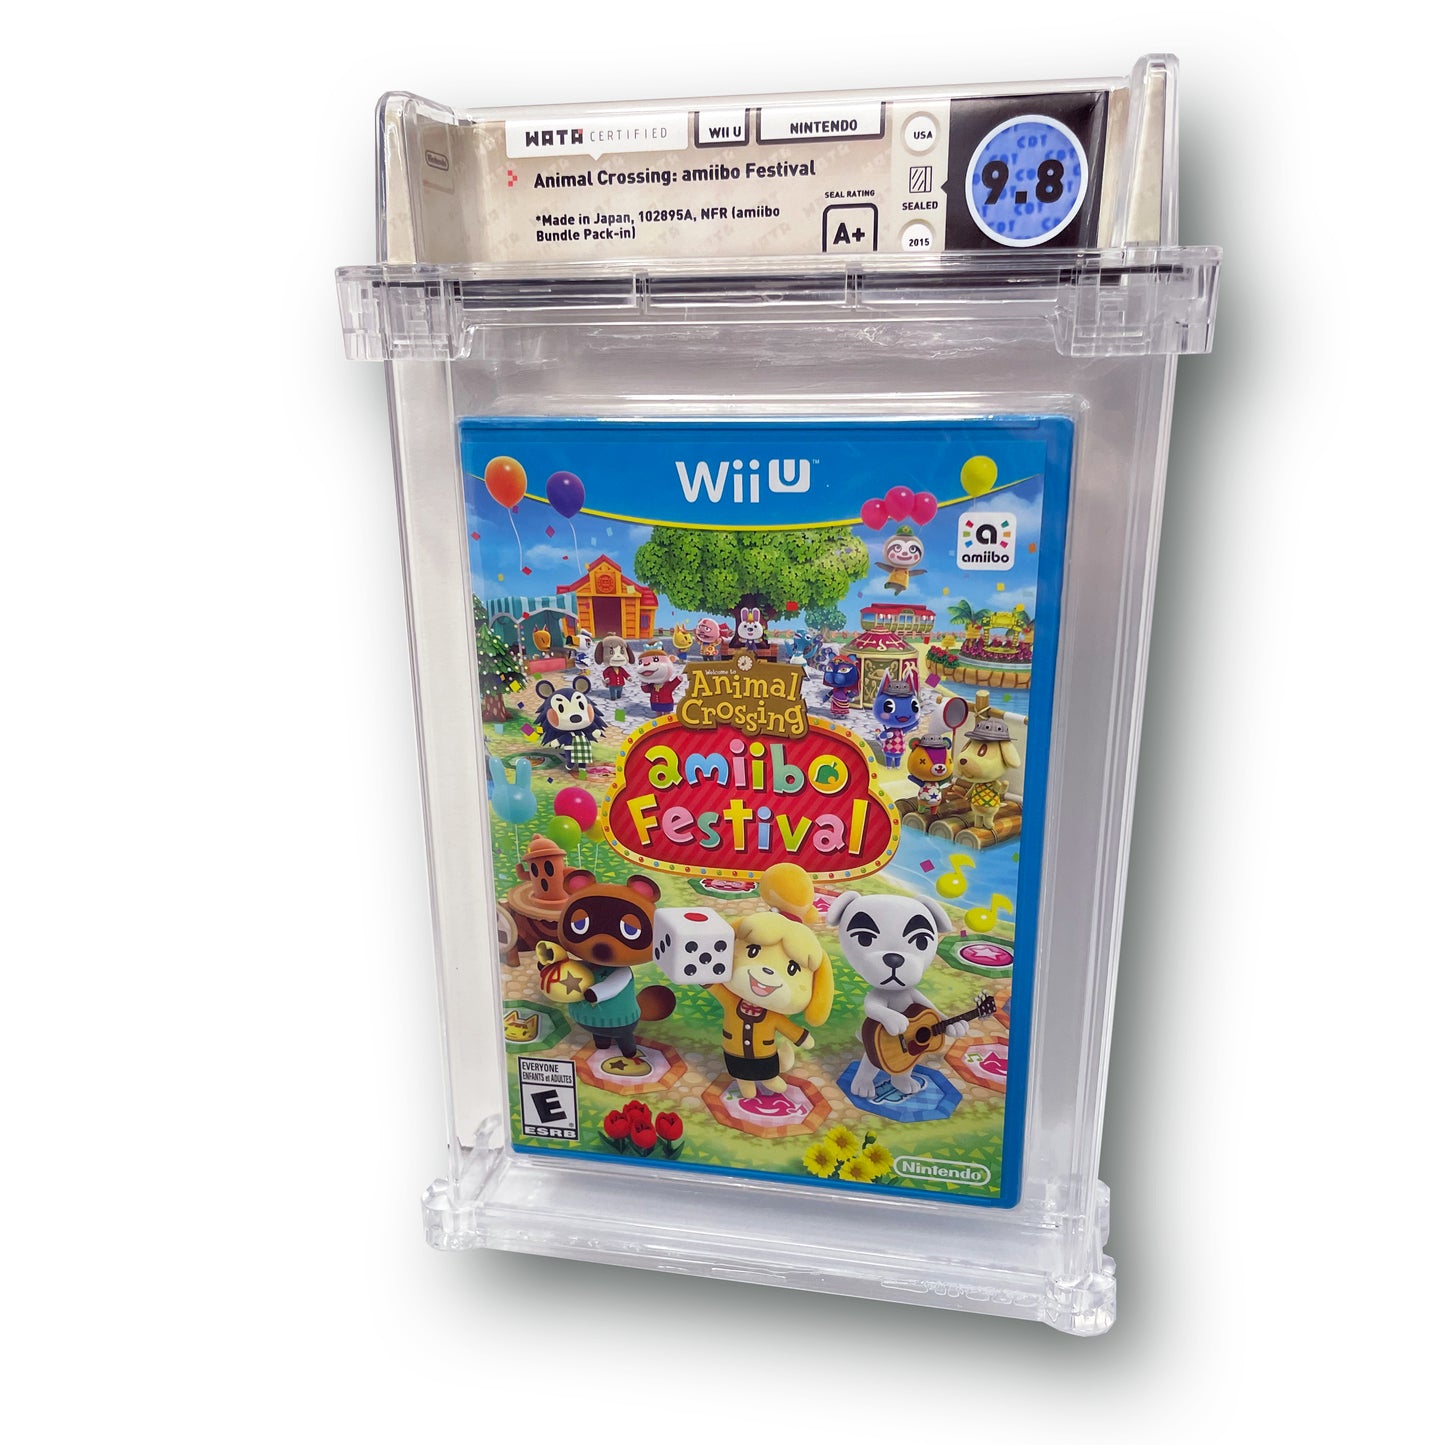 Graded Video Games - Wii U Animal Crossing Amiibo Festival 9.8